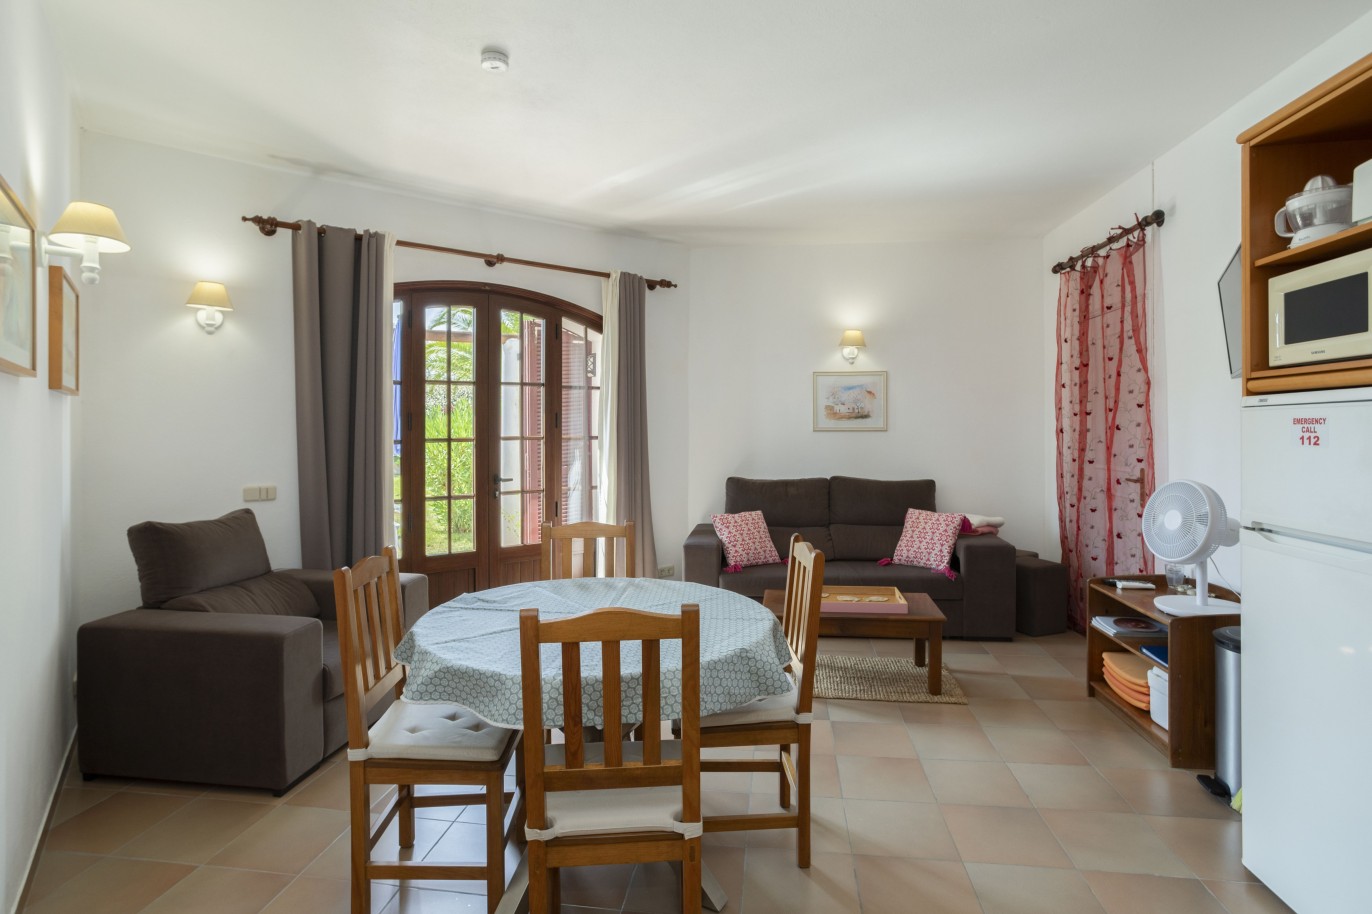 7 Bed Country Villa with swimming pool for sale in Estoi, Algarve_230961